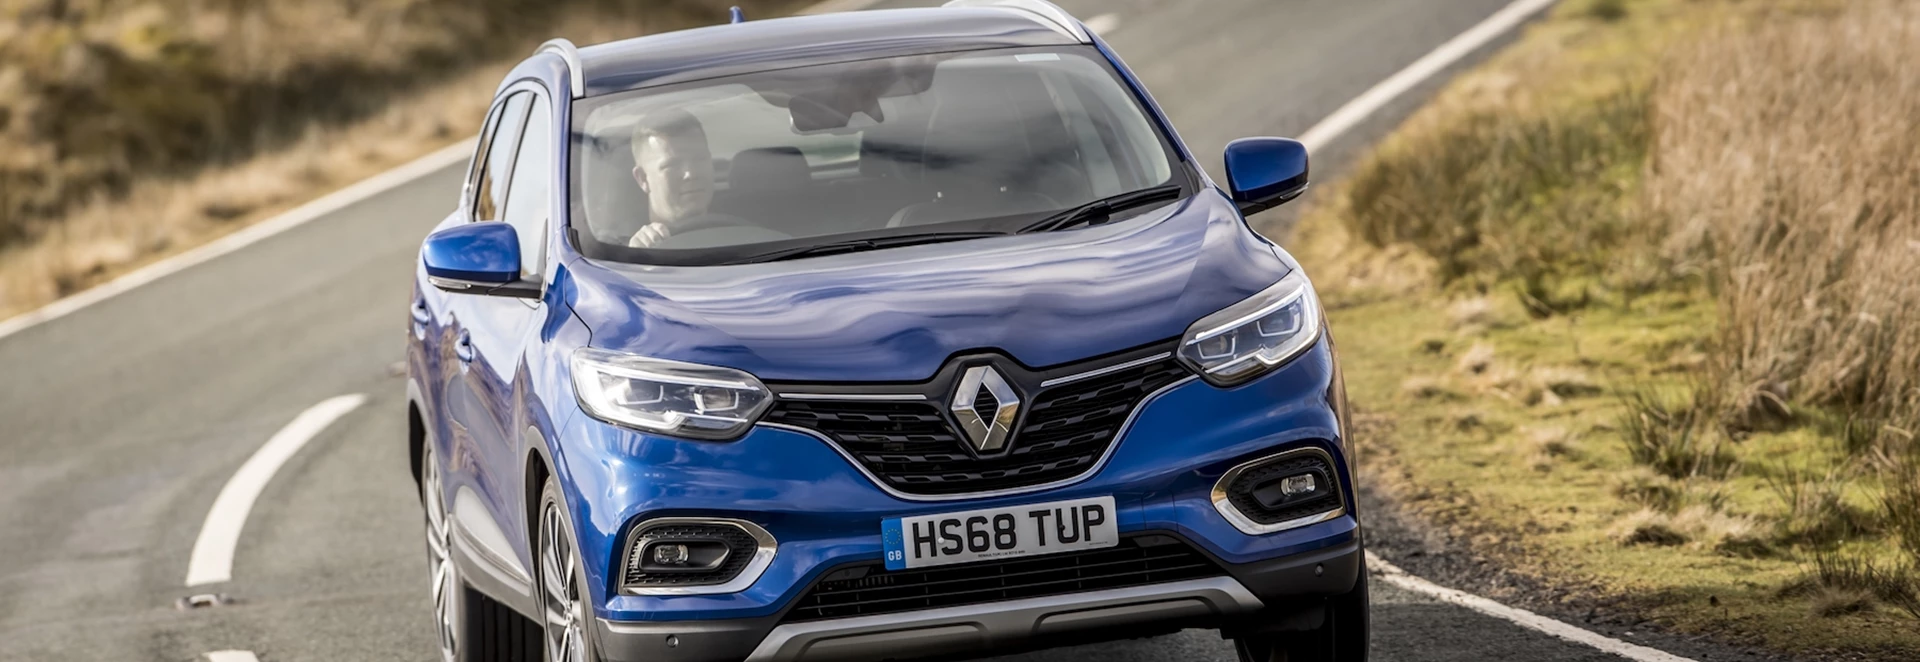 What’s new on the 2019 Renault Kadjar?